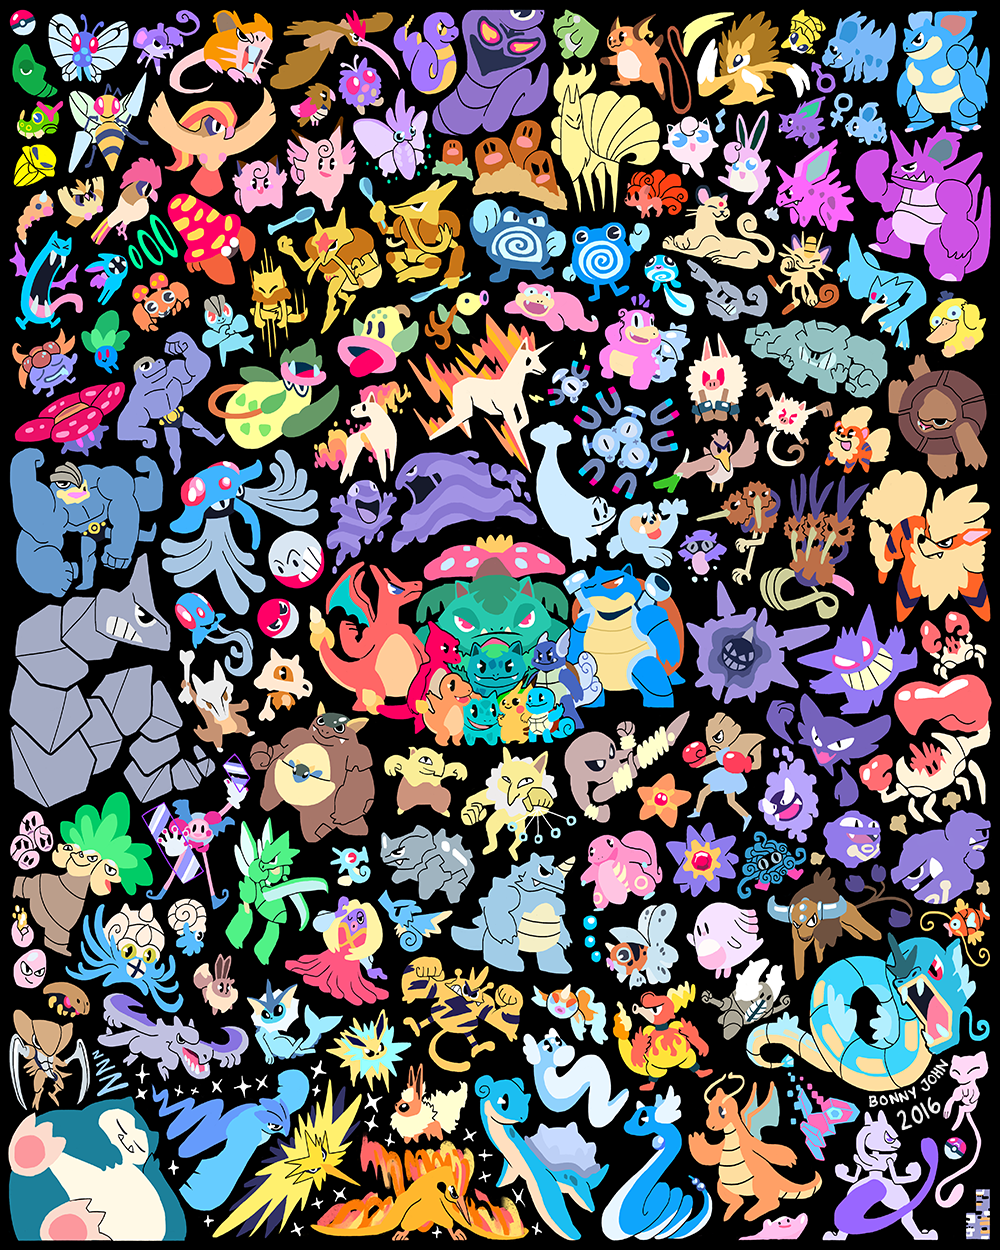 151 Mew - Pokemon One a Day by Bonny John on Dribbble